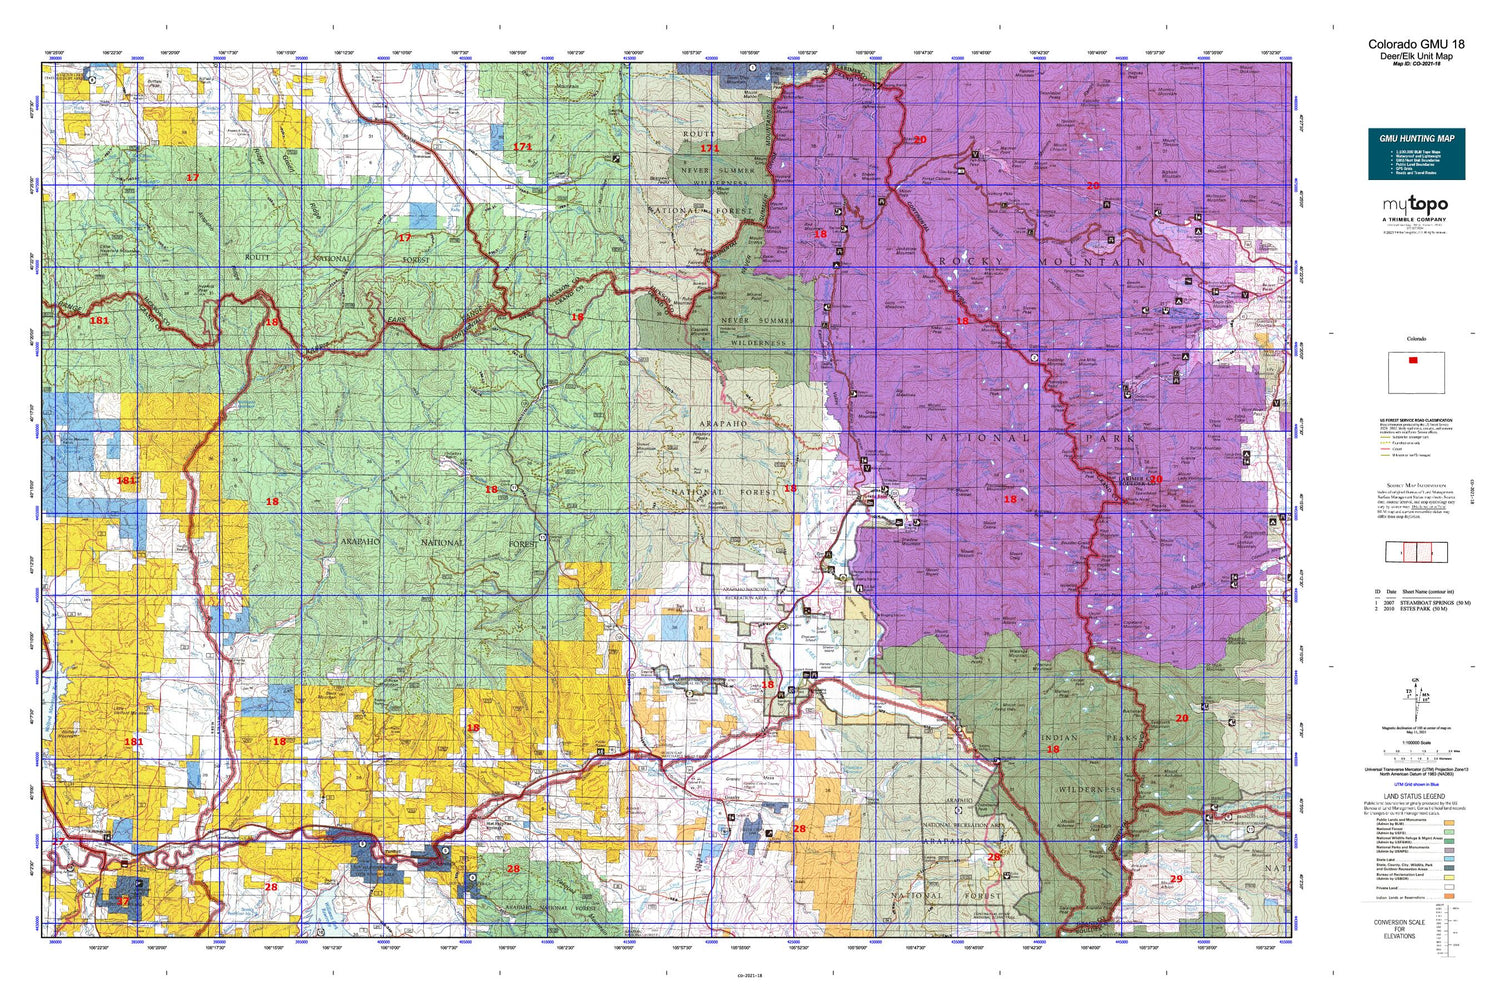 Colorado GMU 18 Map Image